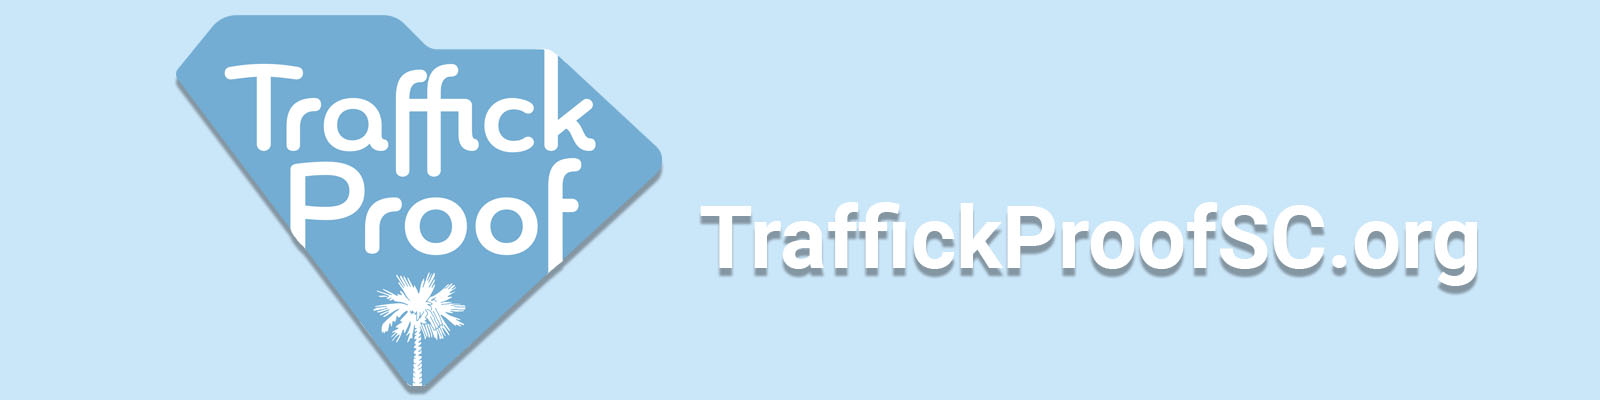 TraffickProofSC logo